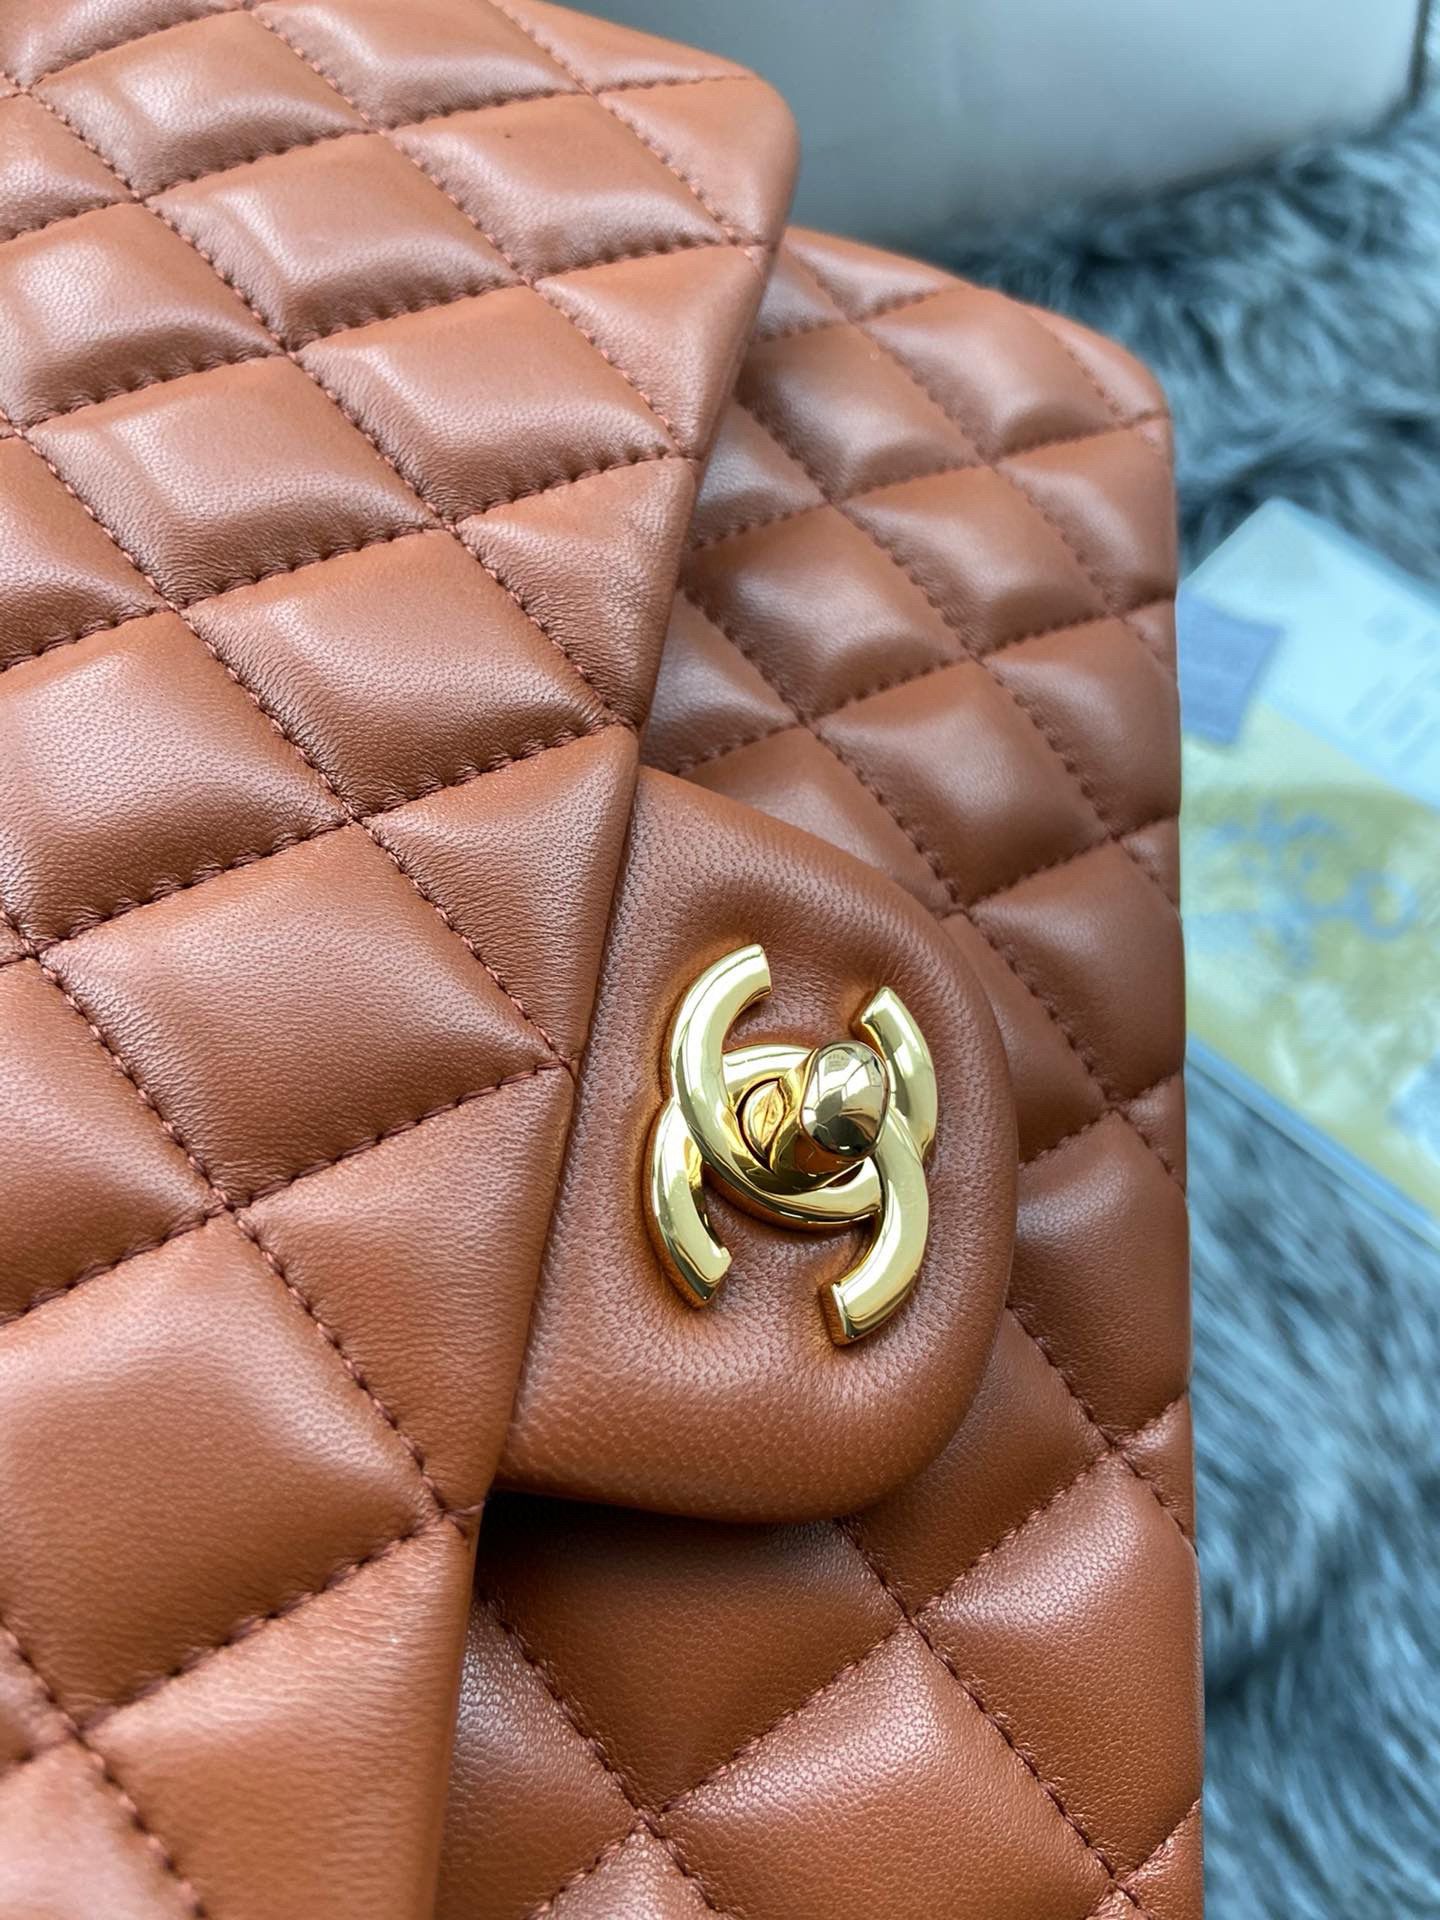 Chanel 2.55 Series Flap Bag Original Sheepskin Leather Y01295 A01112 Brown Gold-Tone hardware